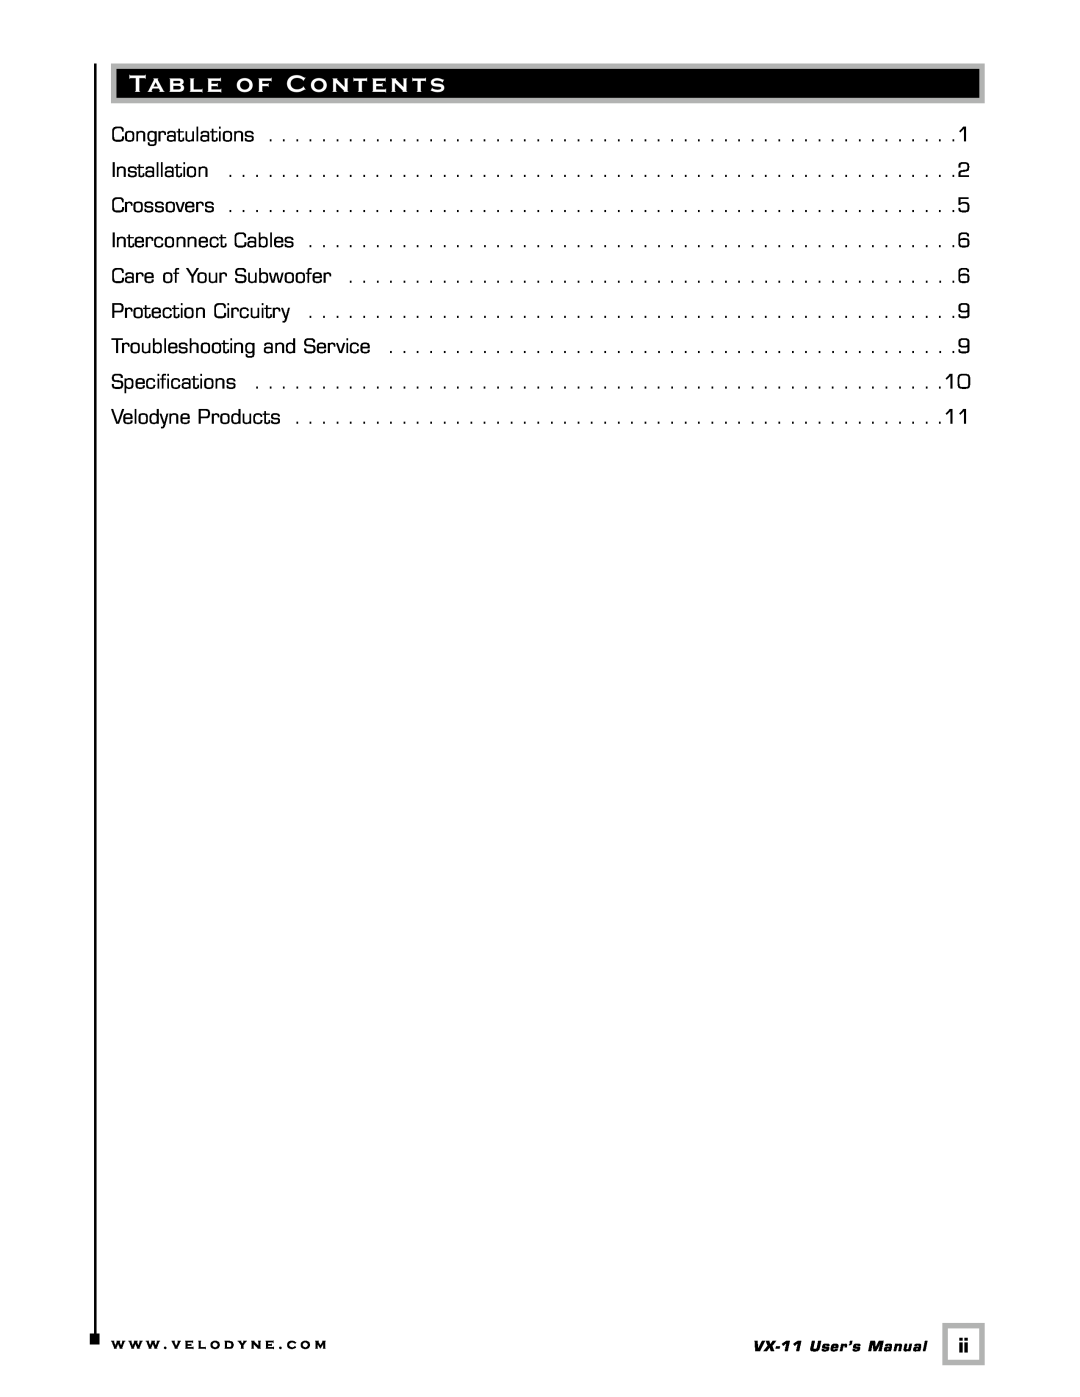 Velodyne Acoustics VX-11 user manual Table of Contents, w w w . v e l o d y n e . c o m 